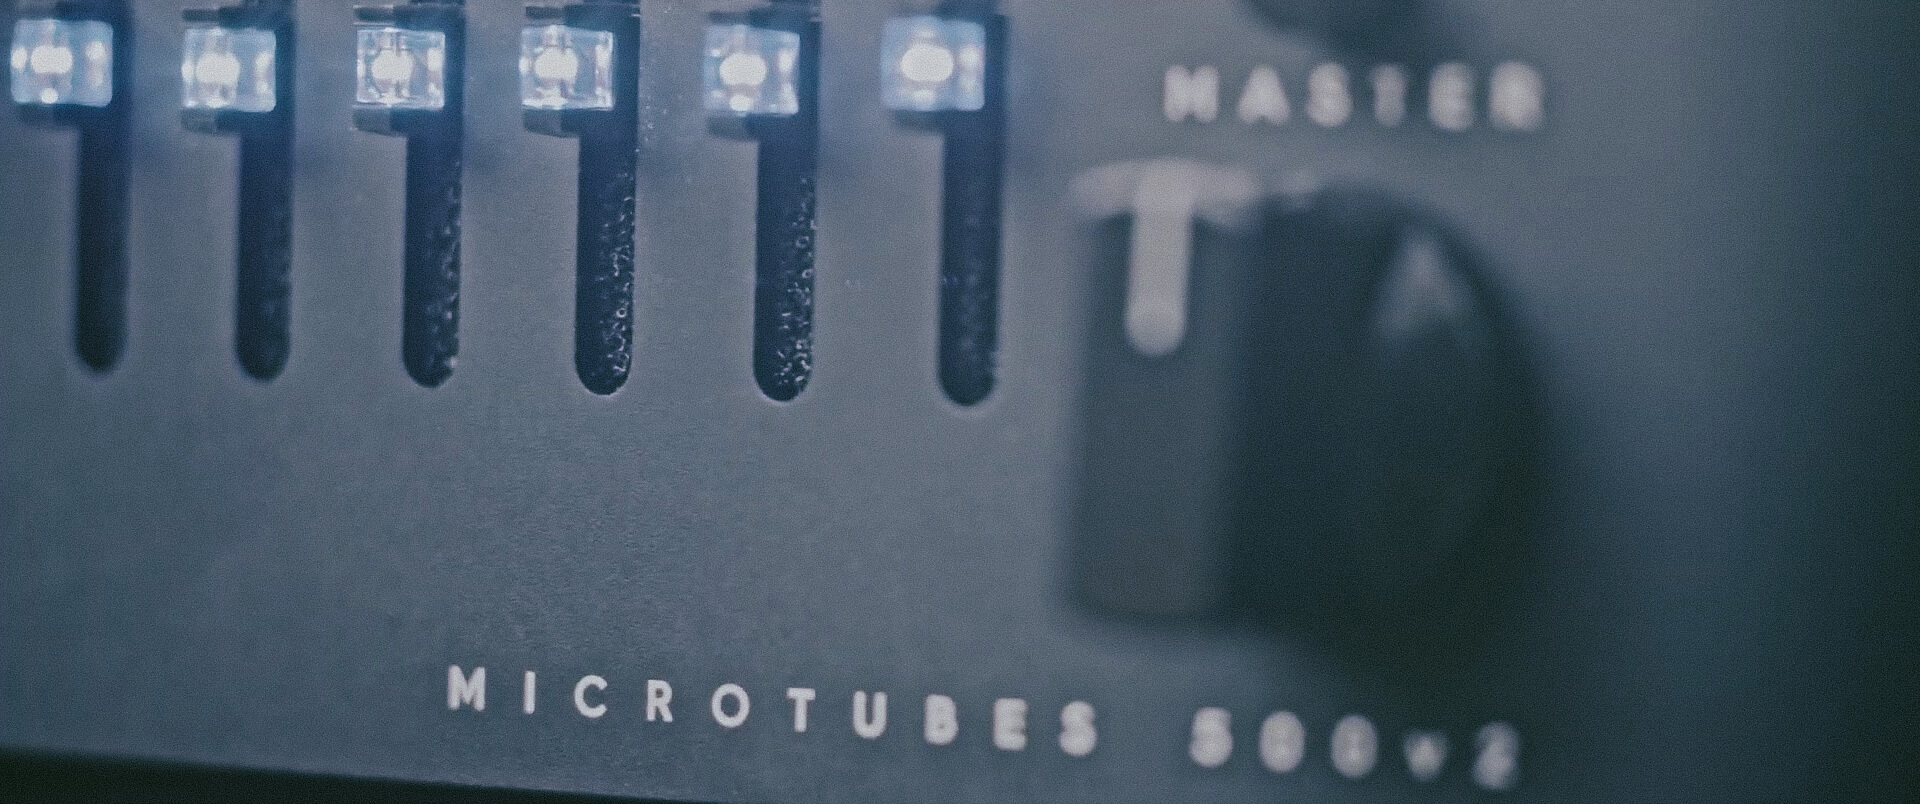 Microtubes 500v2 – Darkglass Electronics